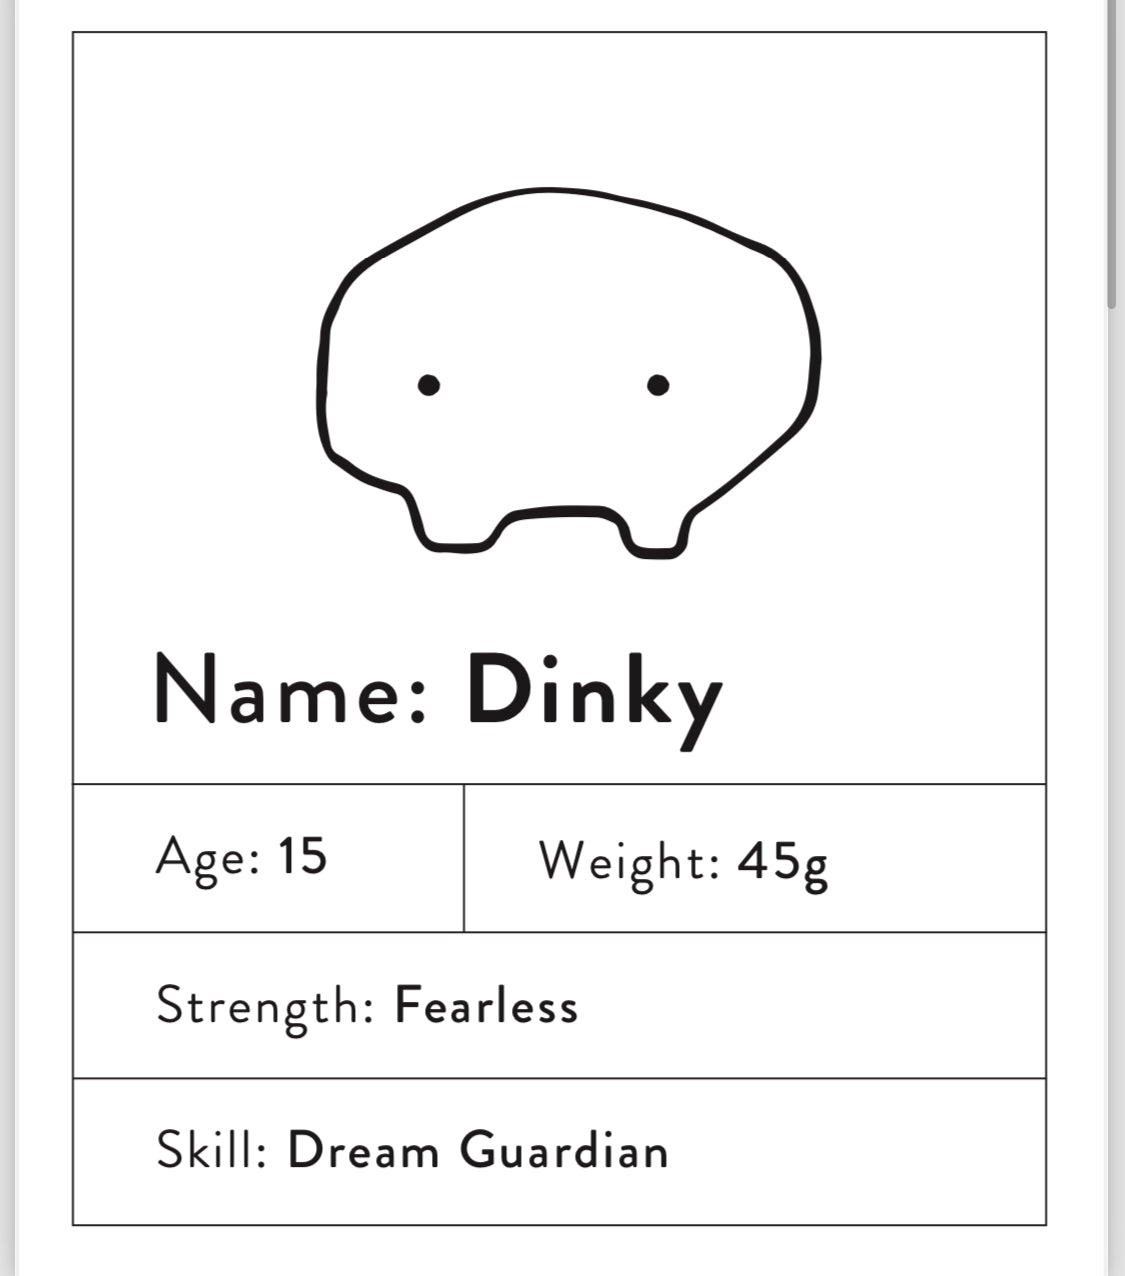 Dinky Worrywart